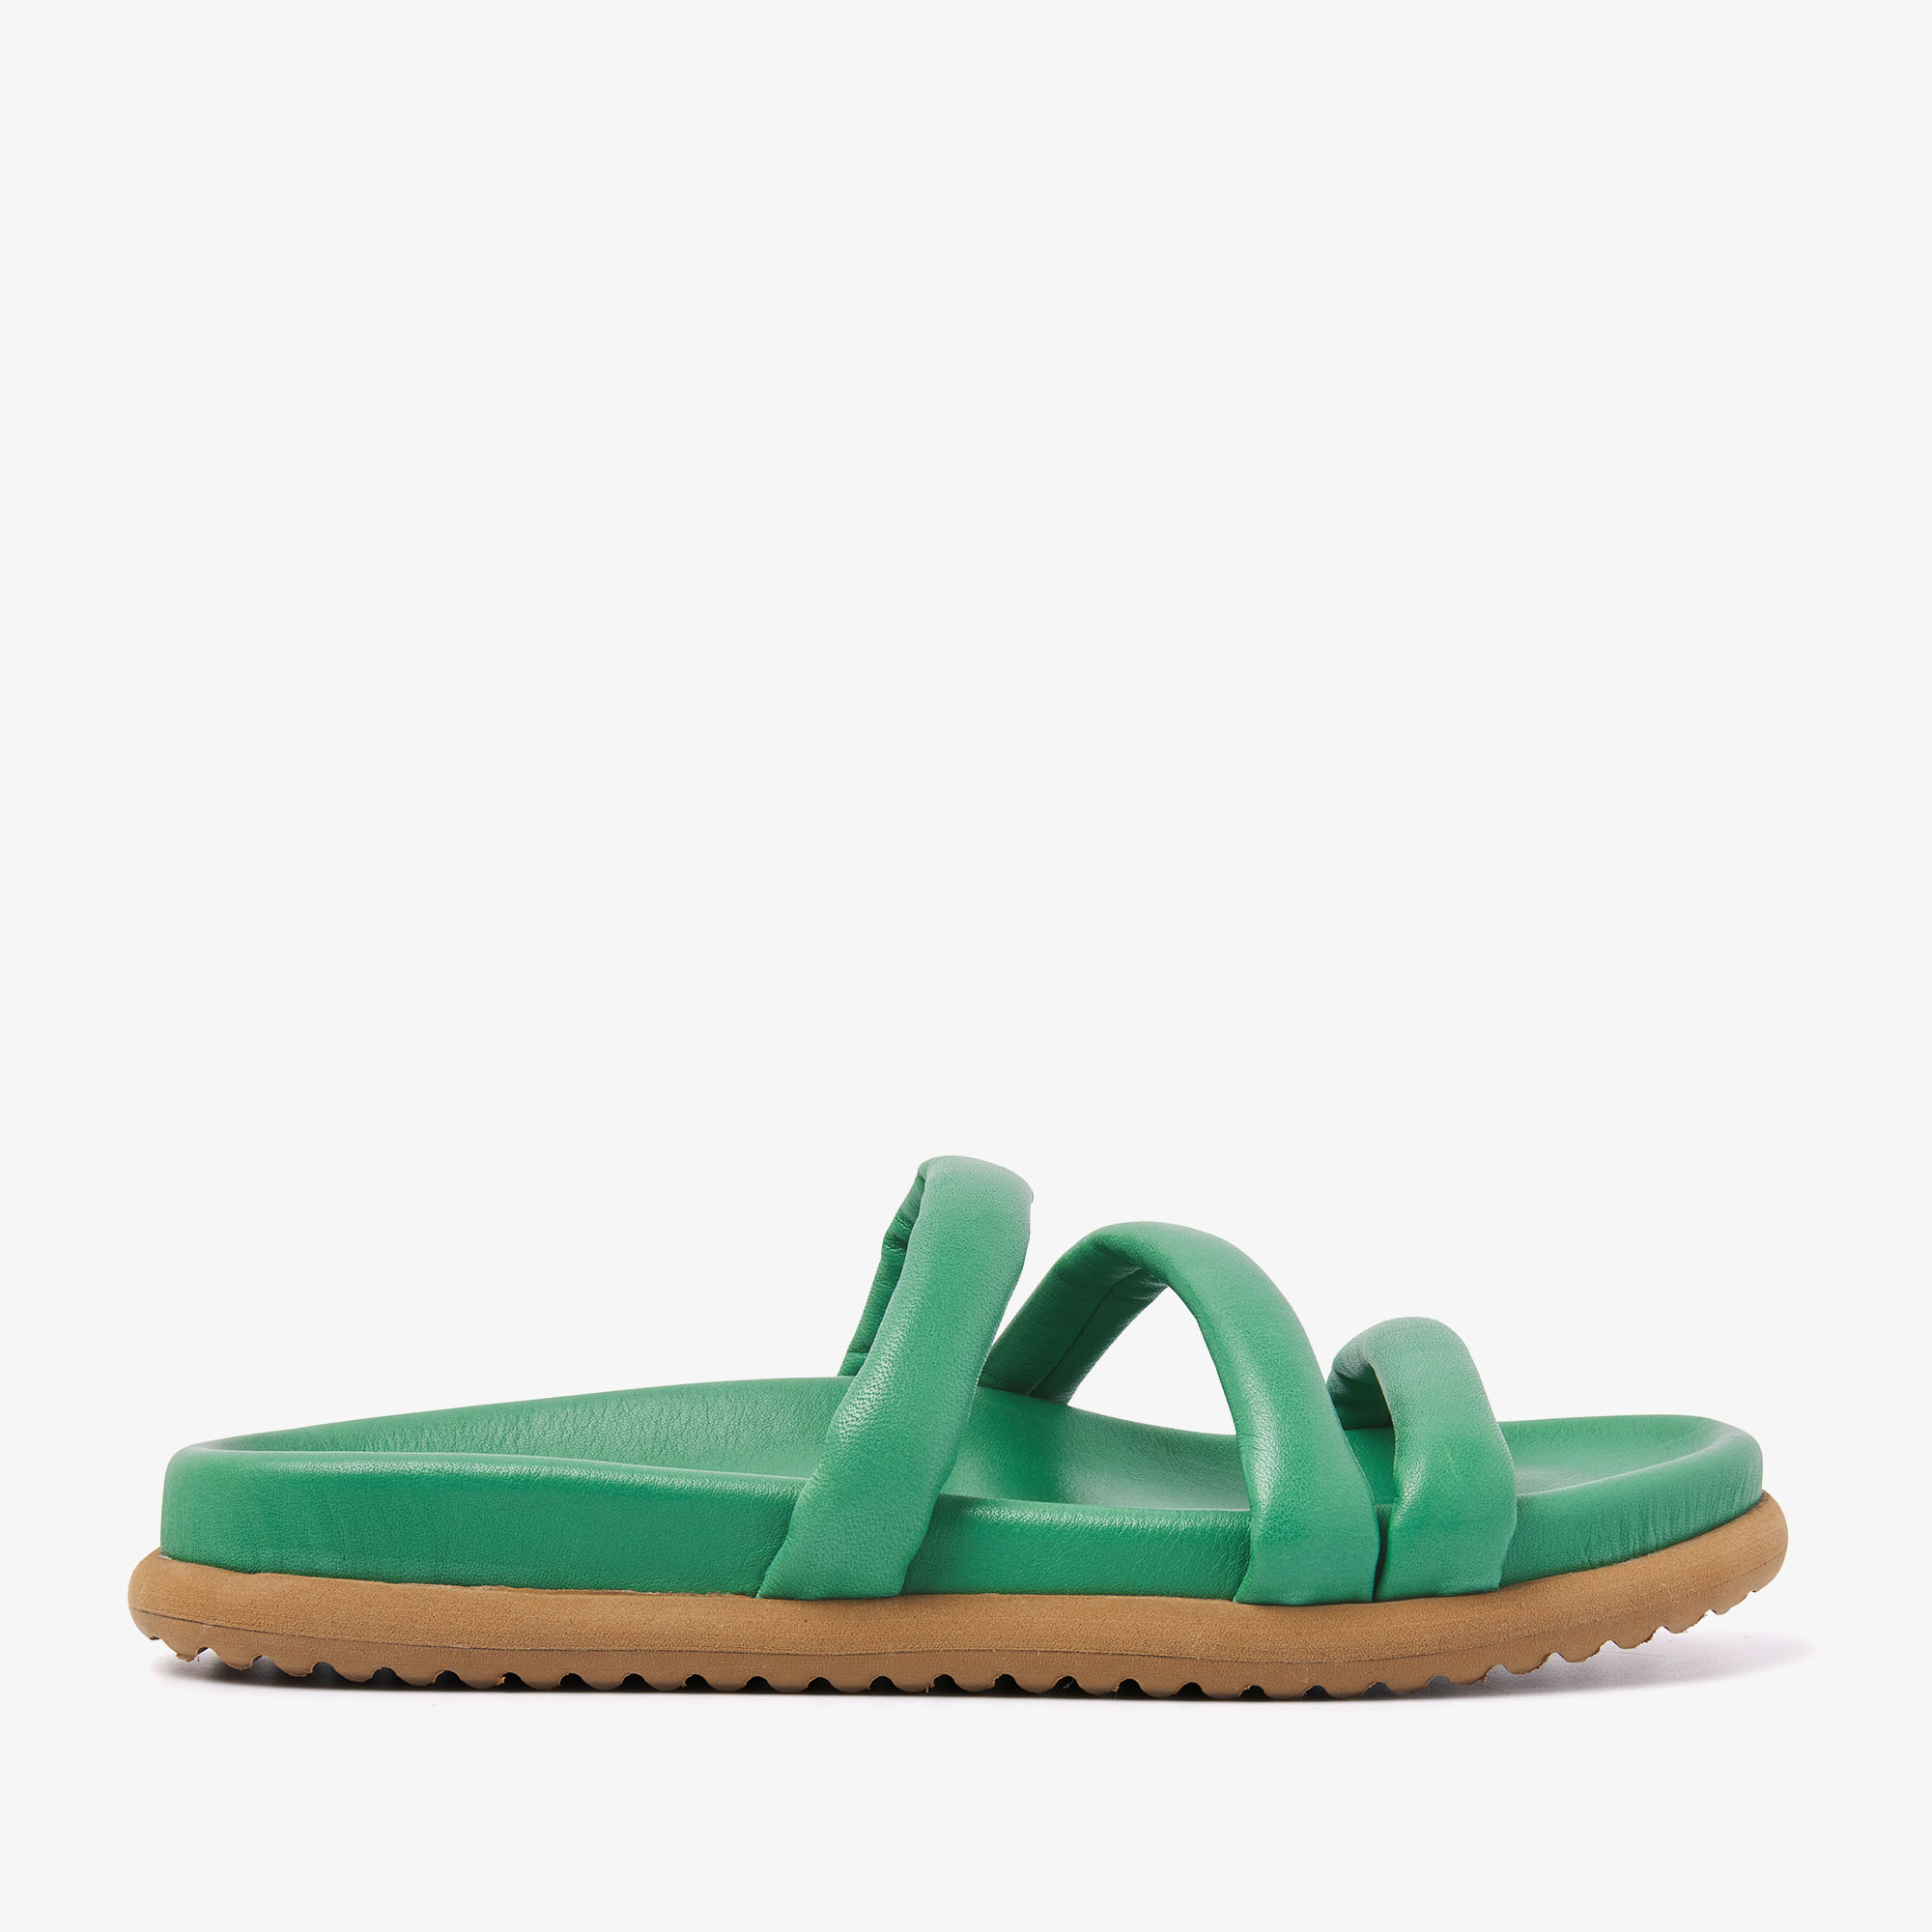 VIA VAI Candy Pop grønne slippers dames - Leather